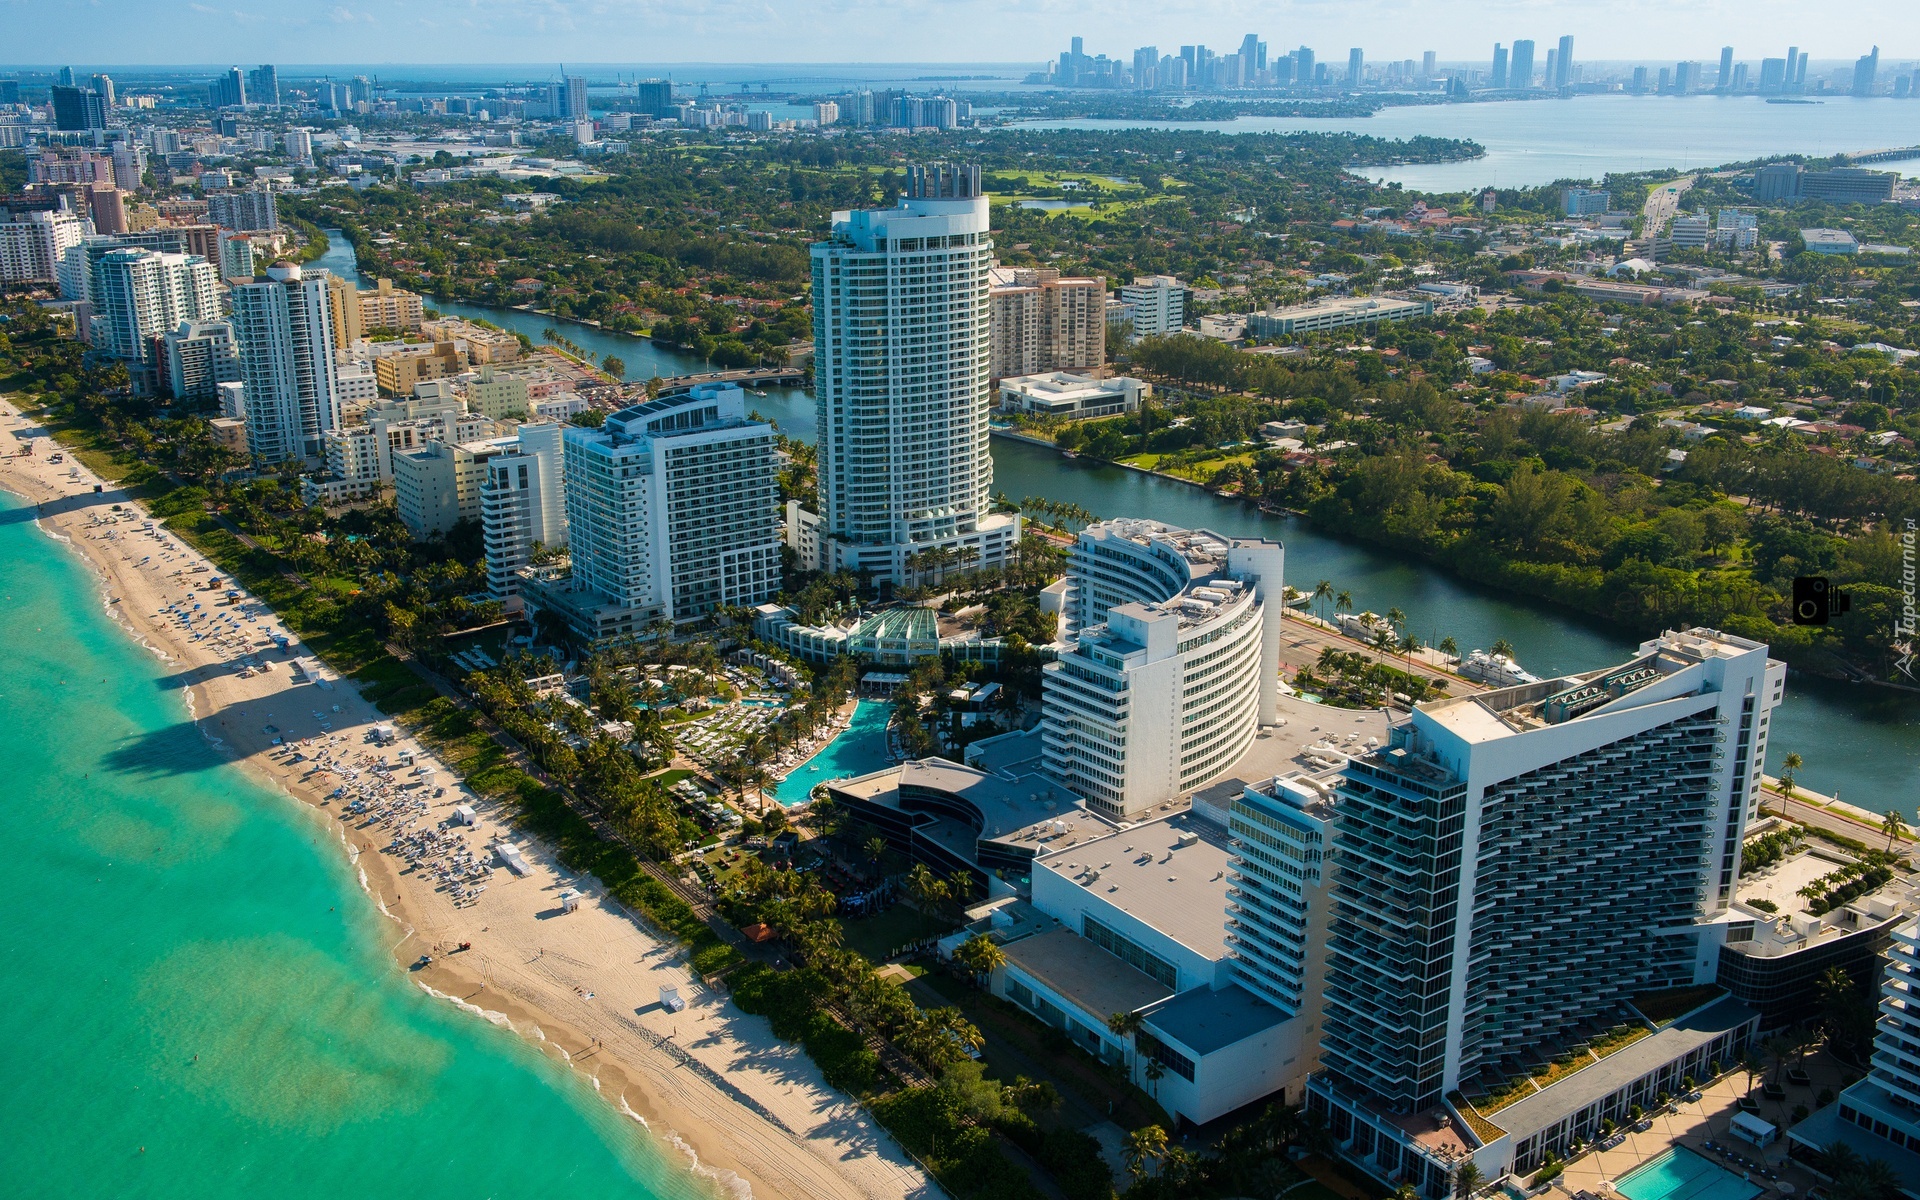 Wieżowce, Plaża, Ocean, Miami, Floryda